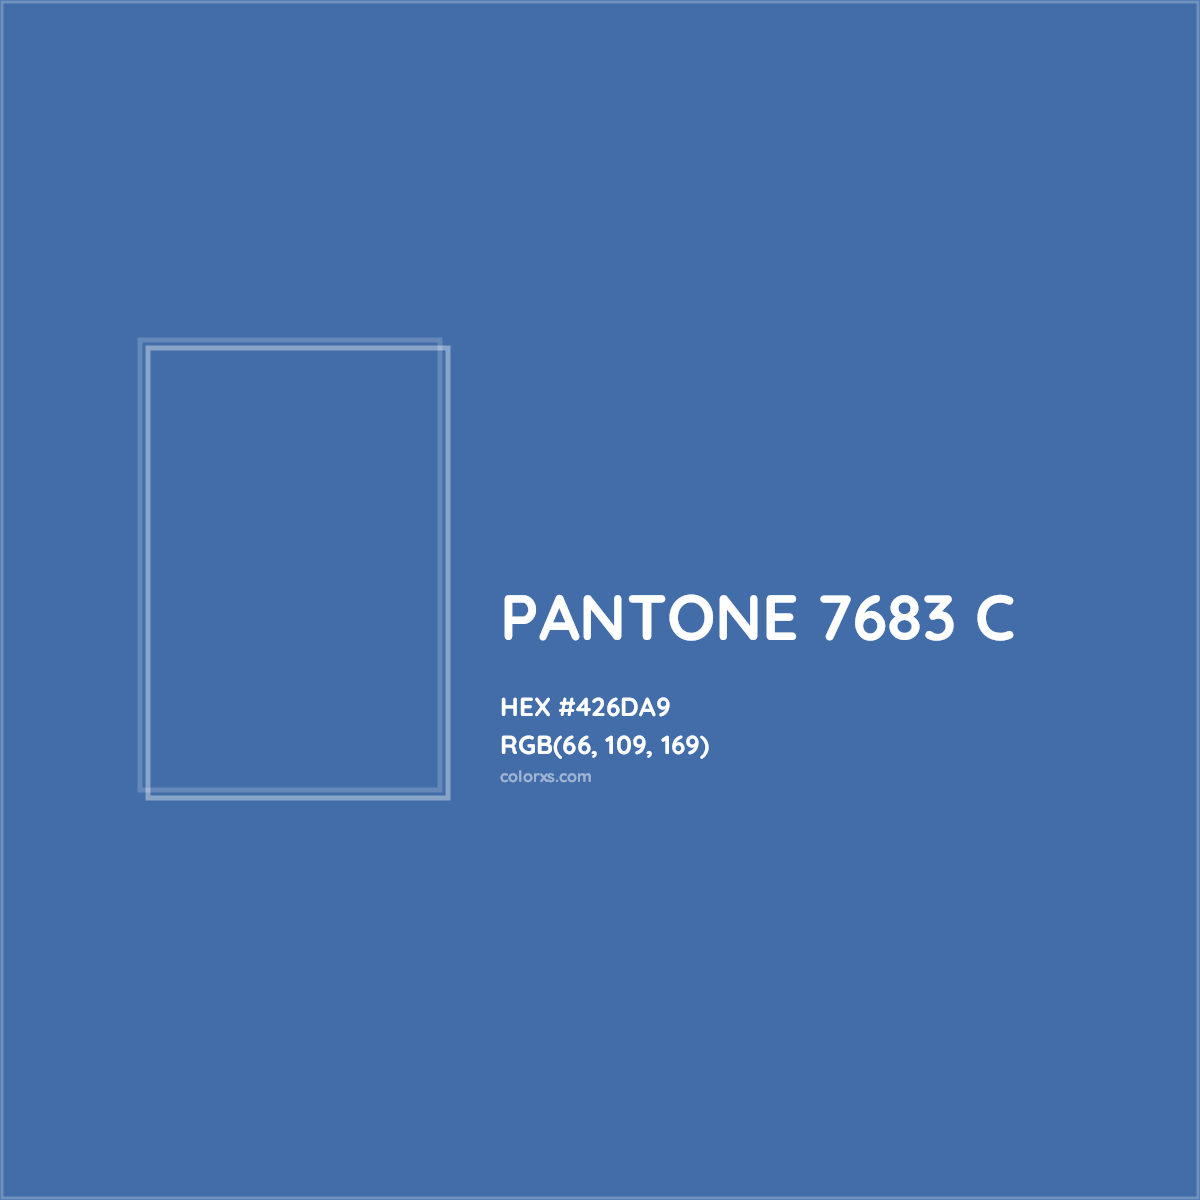 HEX #426DA9 PANTONE 7683 C CMS Pantone PMS - Color Code